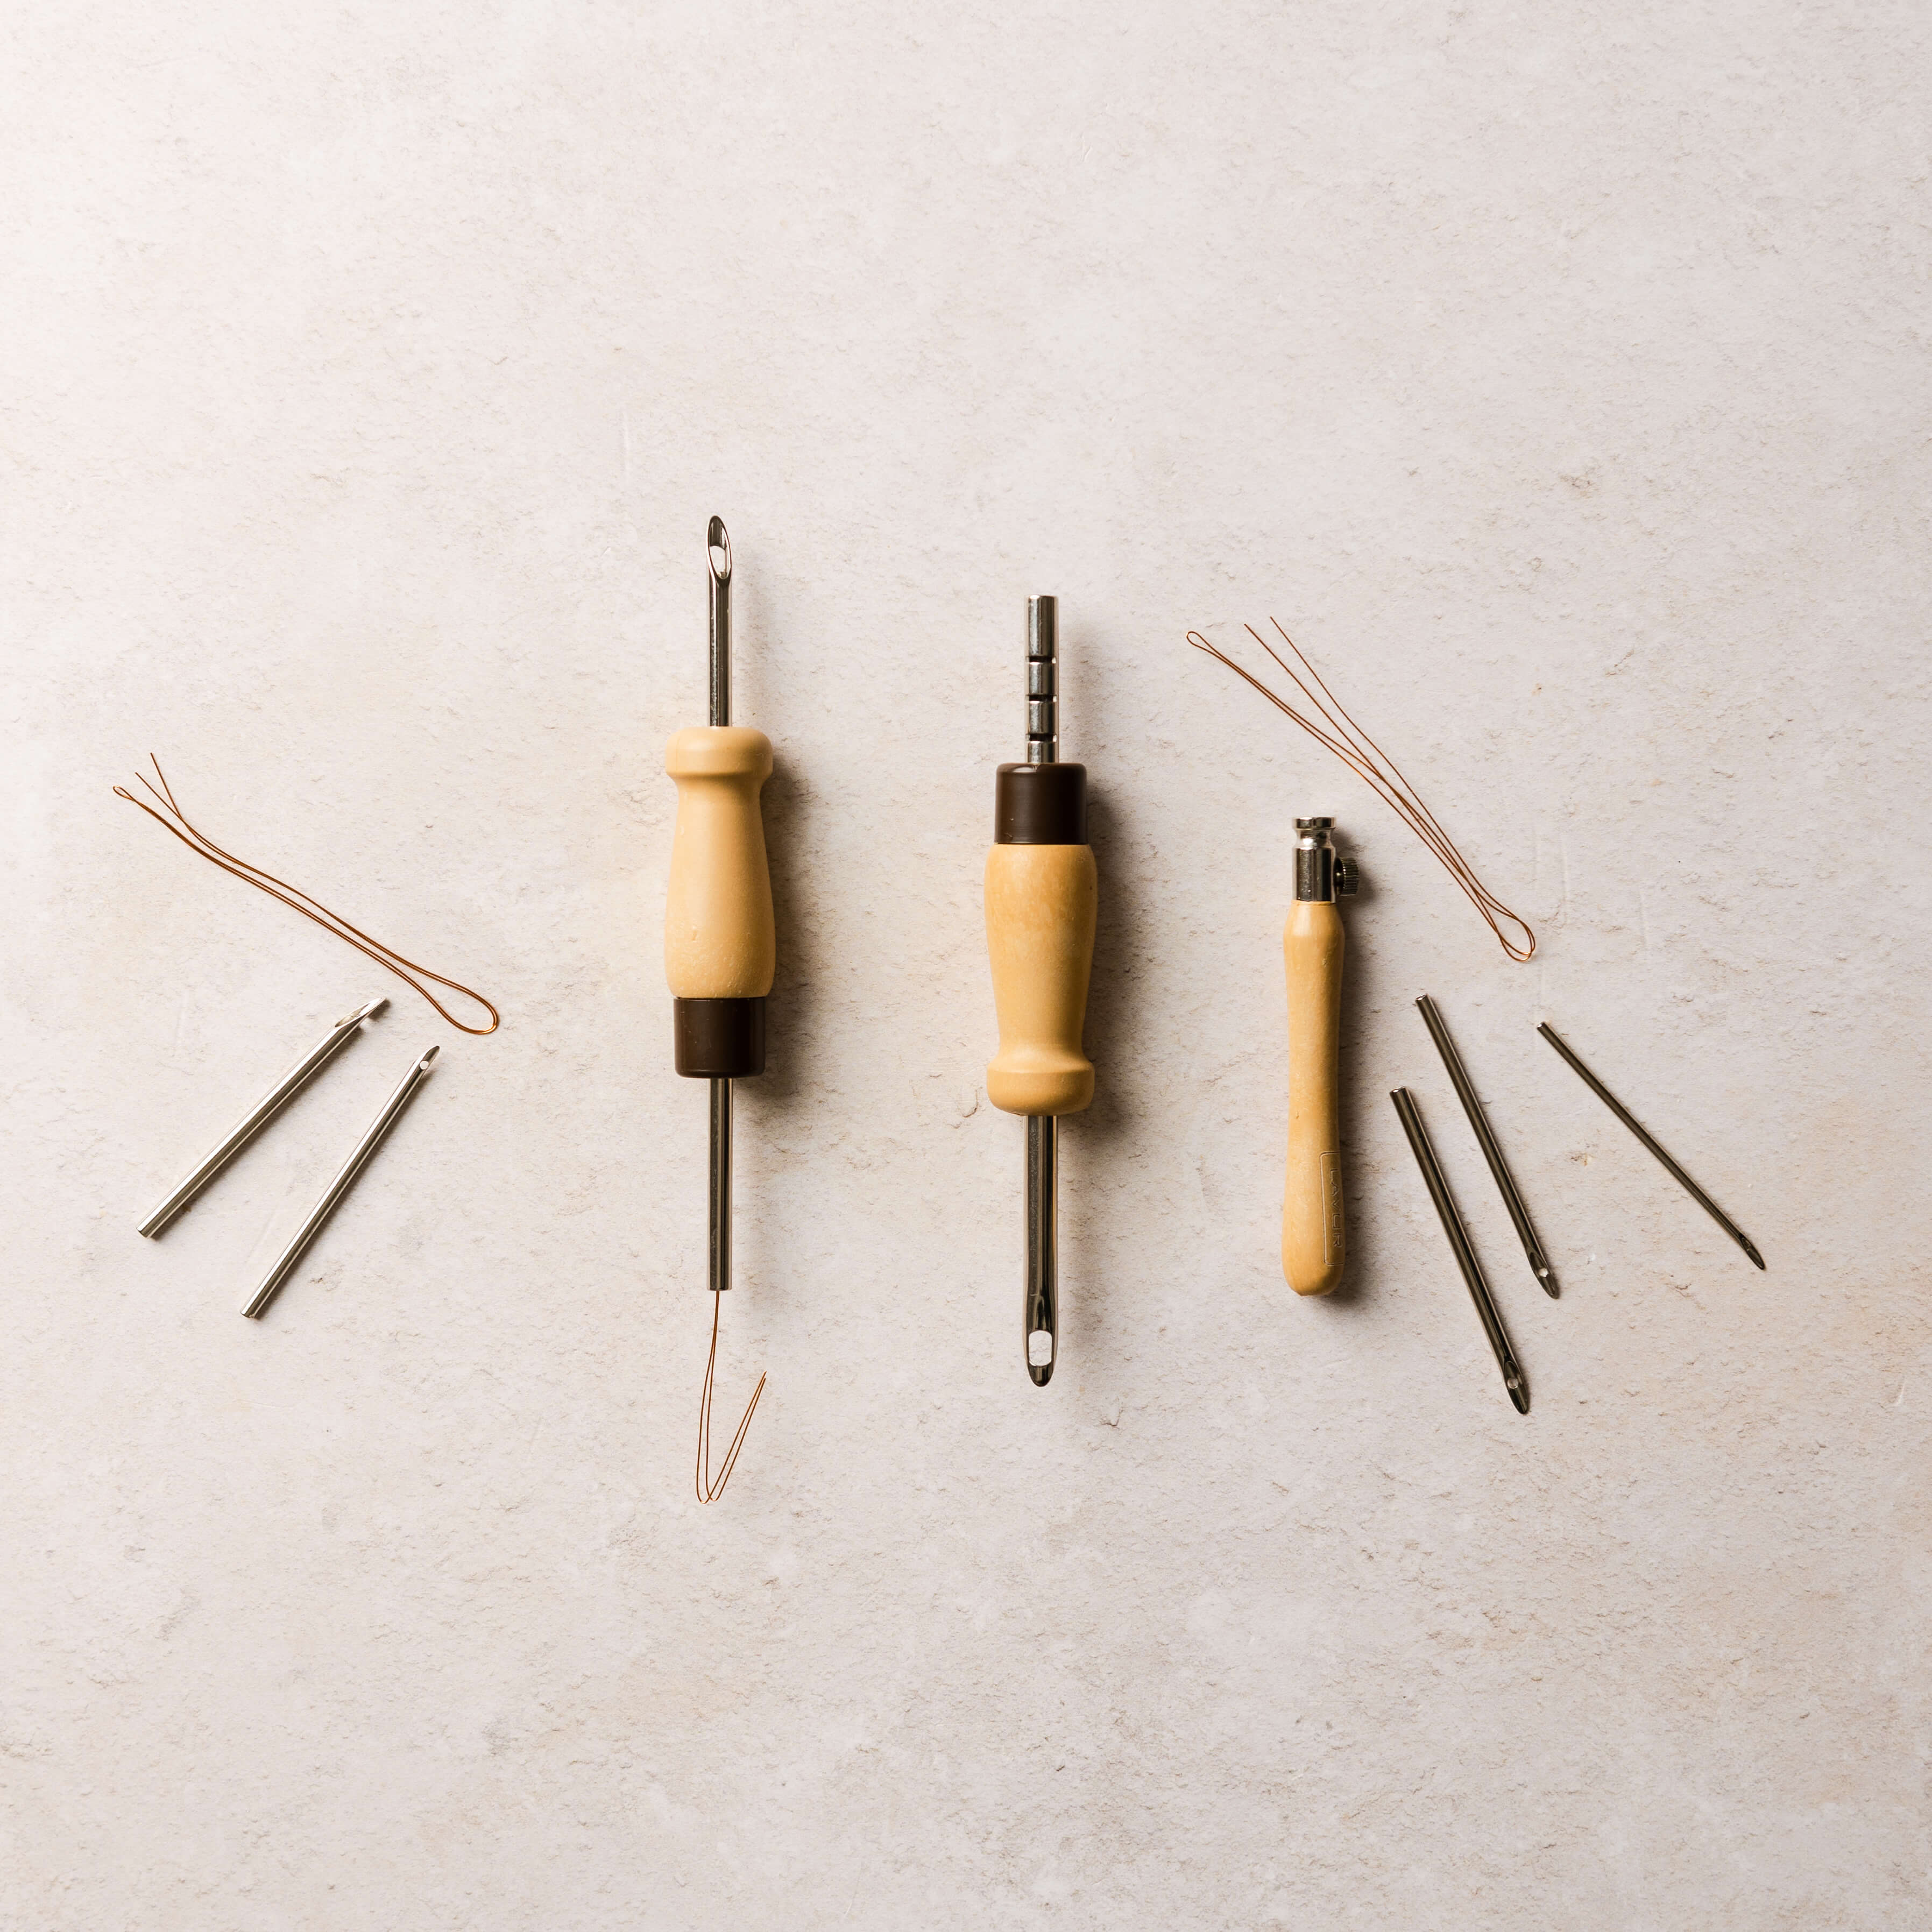 LAVOR ADJUSTABLE PUNCH Needle - New Ergonomic Handle - 5.5mm or 4 mm